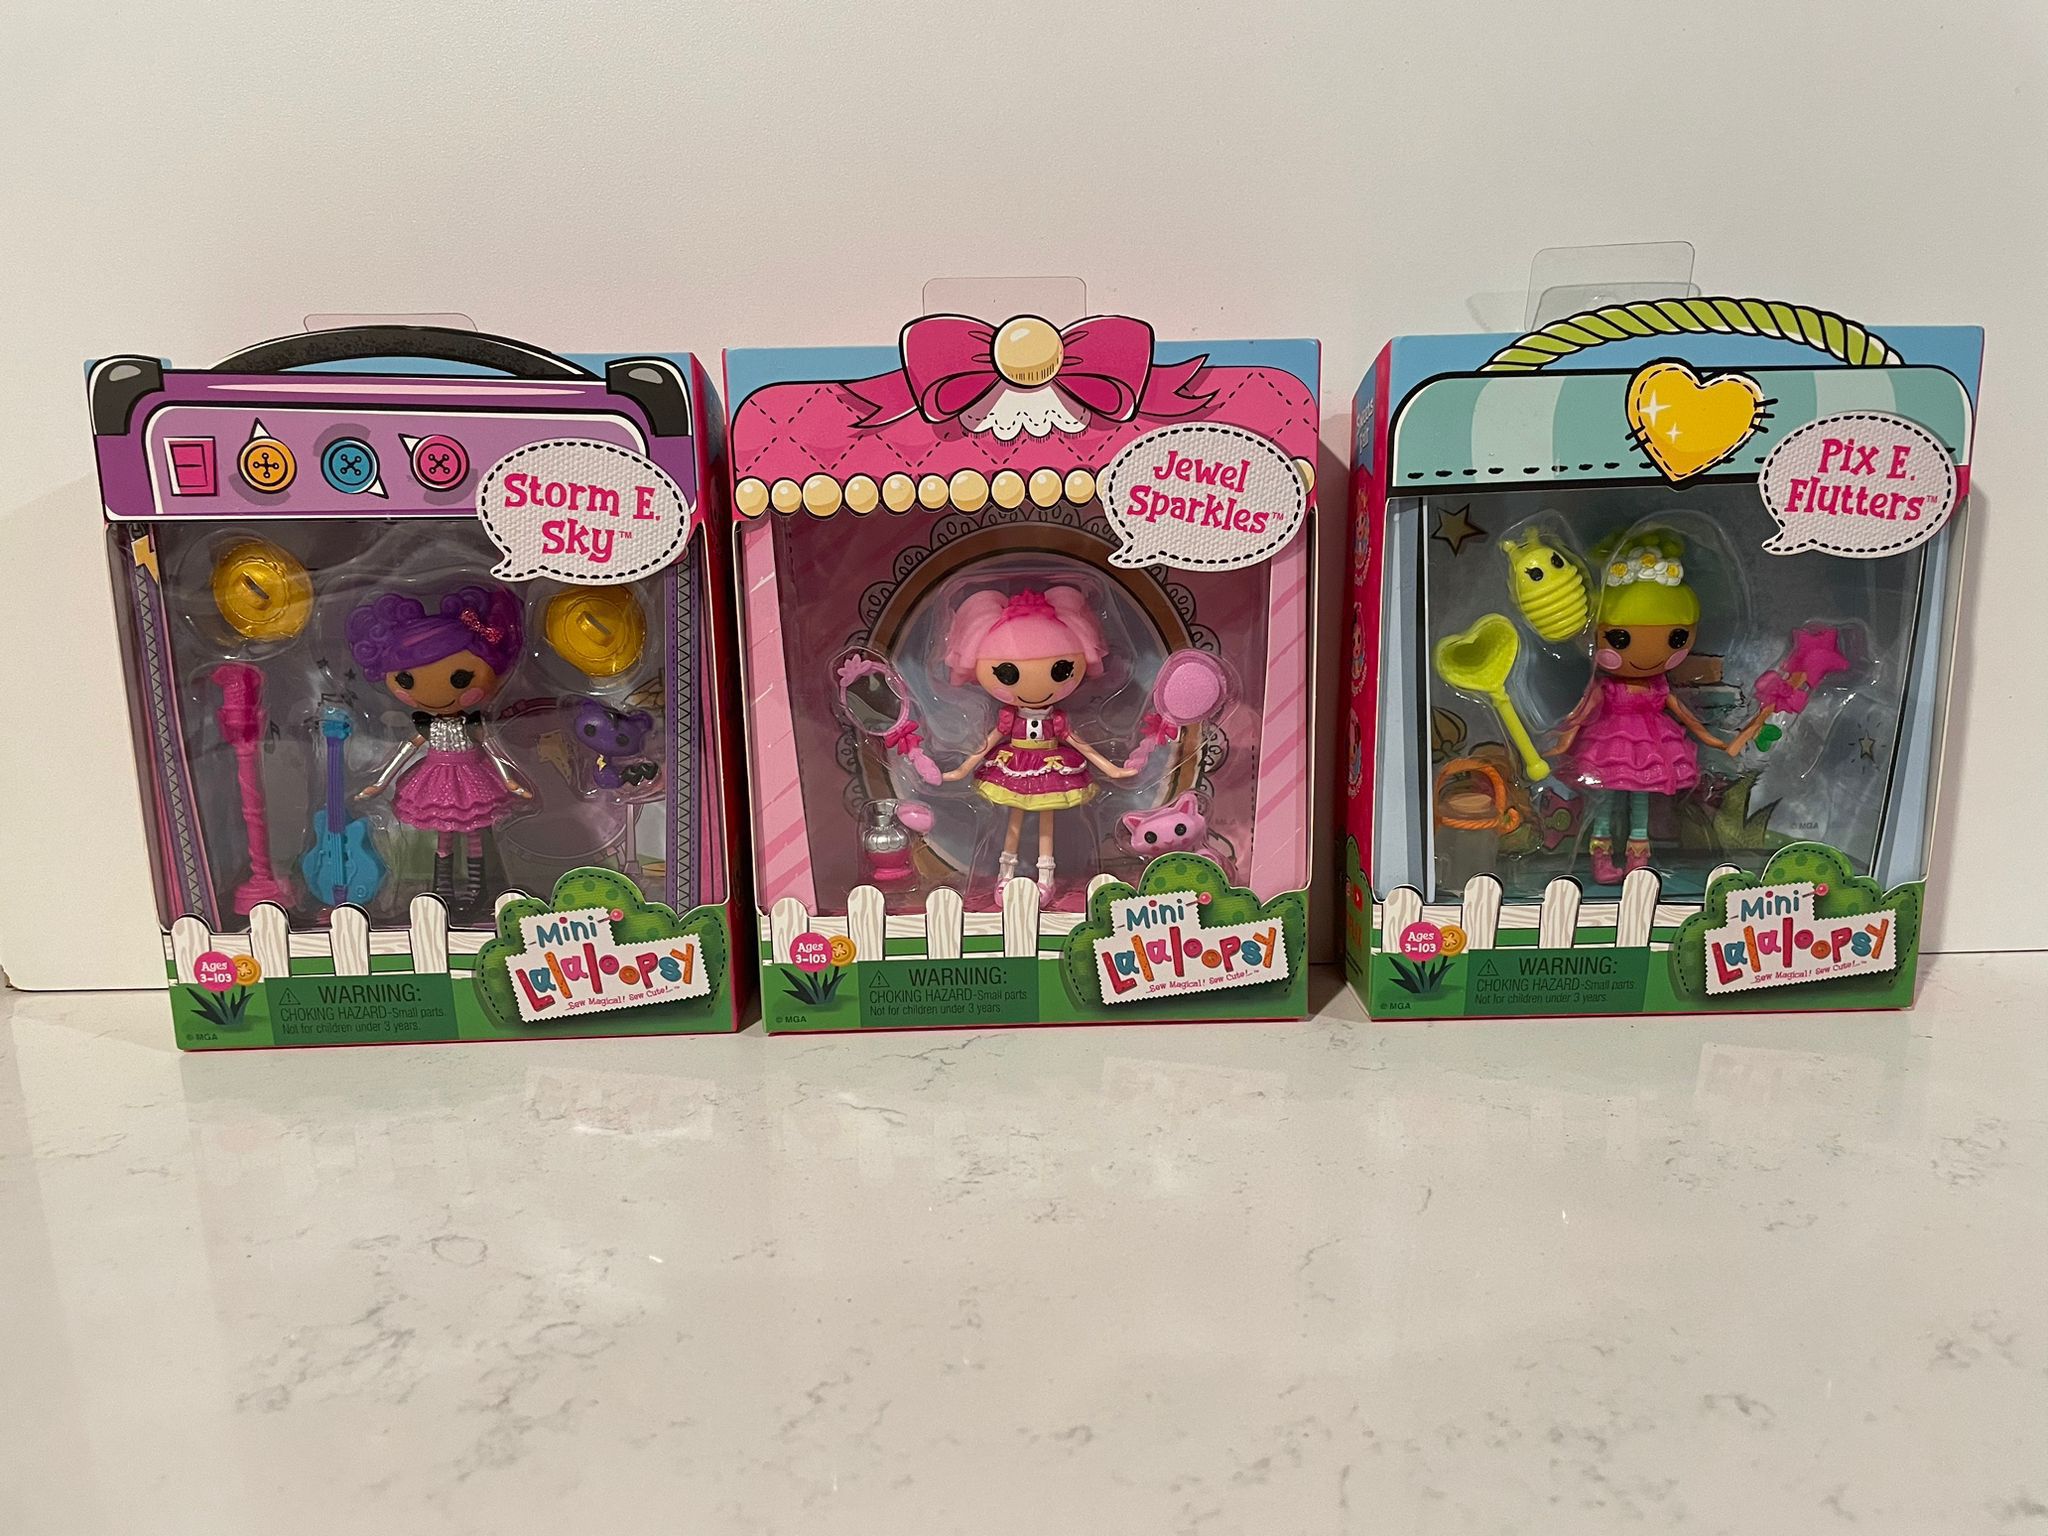 4 Mini Lalaloopsy Dolls 2 Pix E. Flutters, 1 Jewel Sparkles, and 1 Storm E. Sky